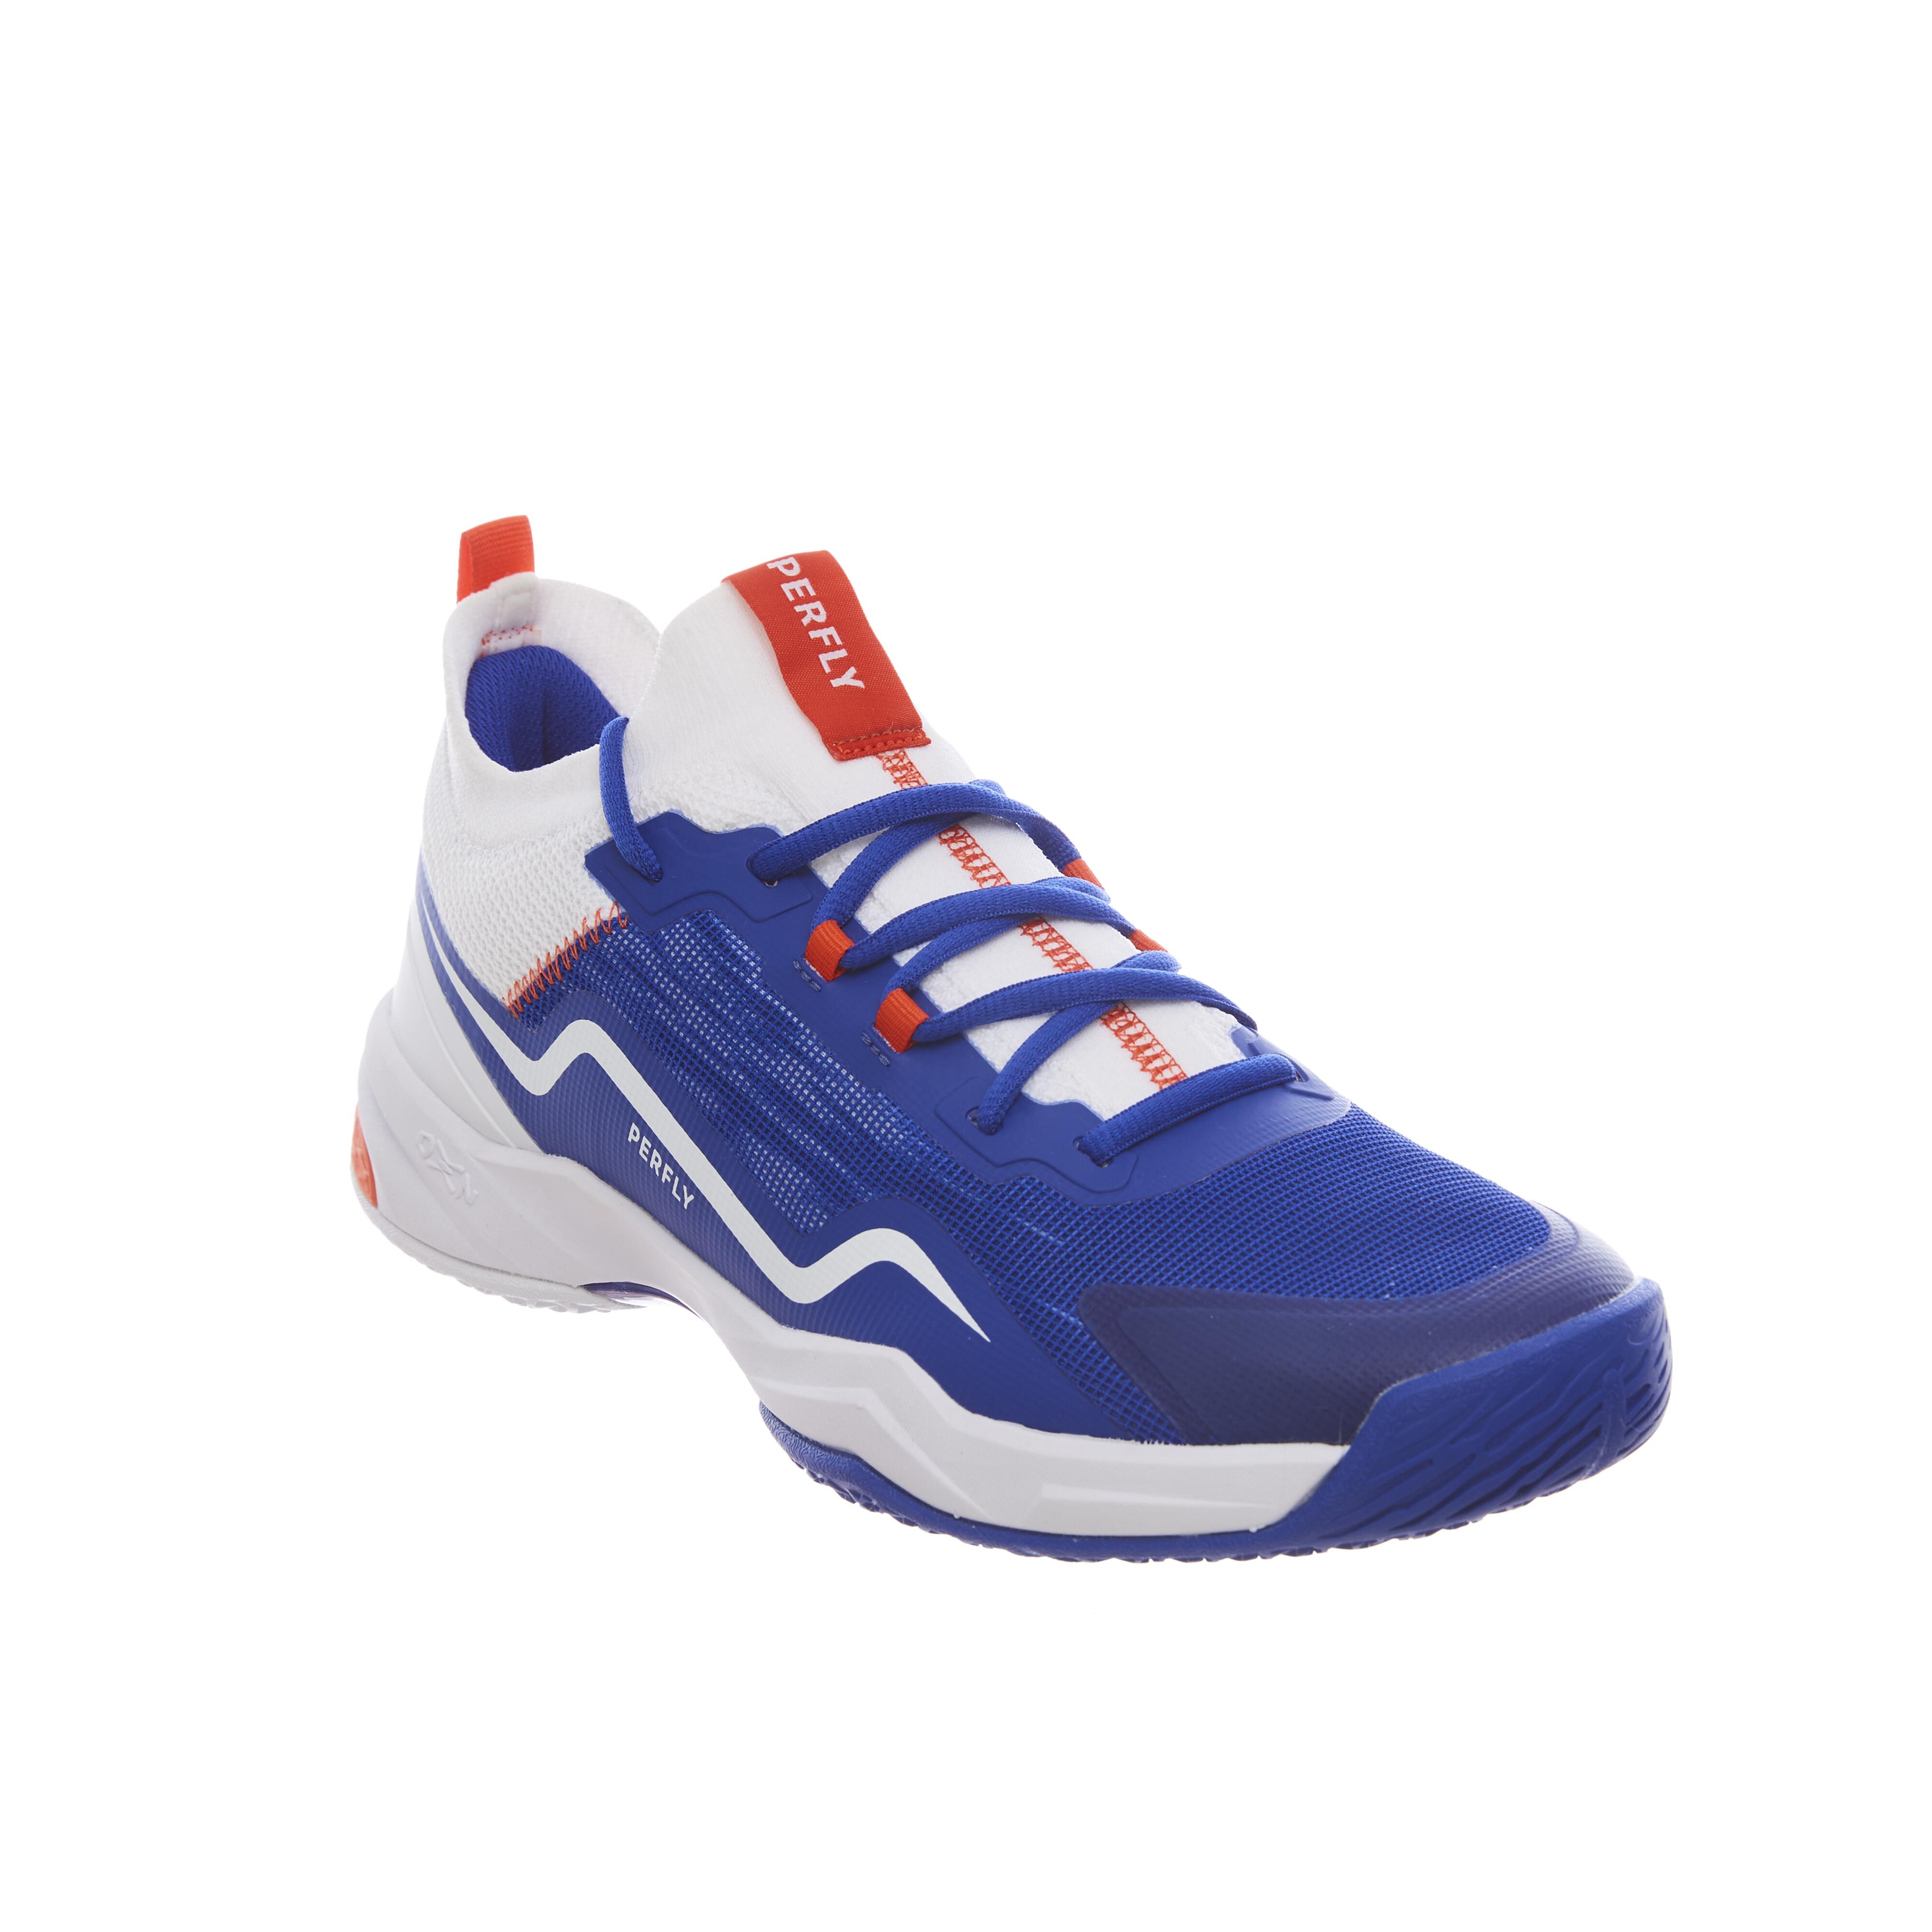 Image of Men Badminton Ultra Lite Shoes - BS 900 Blue/White